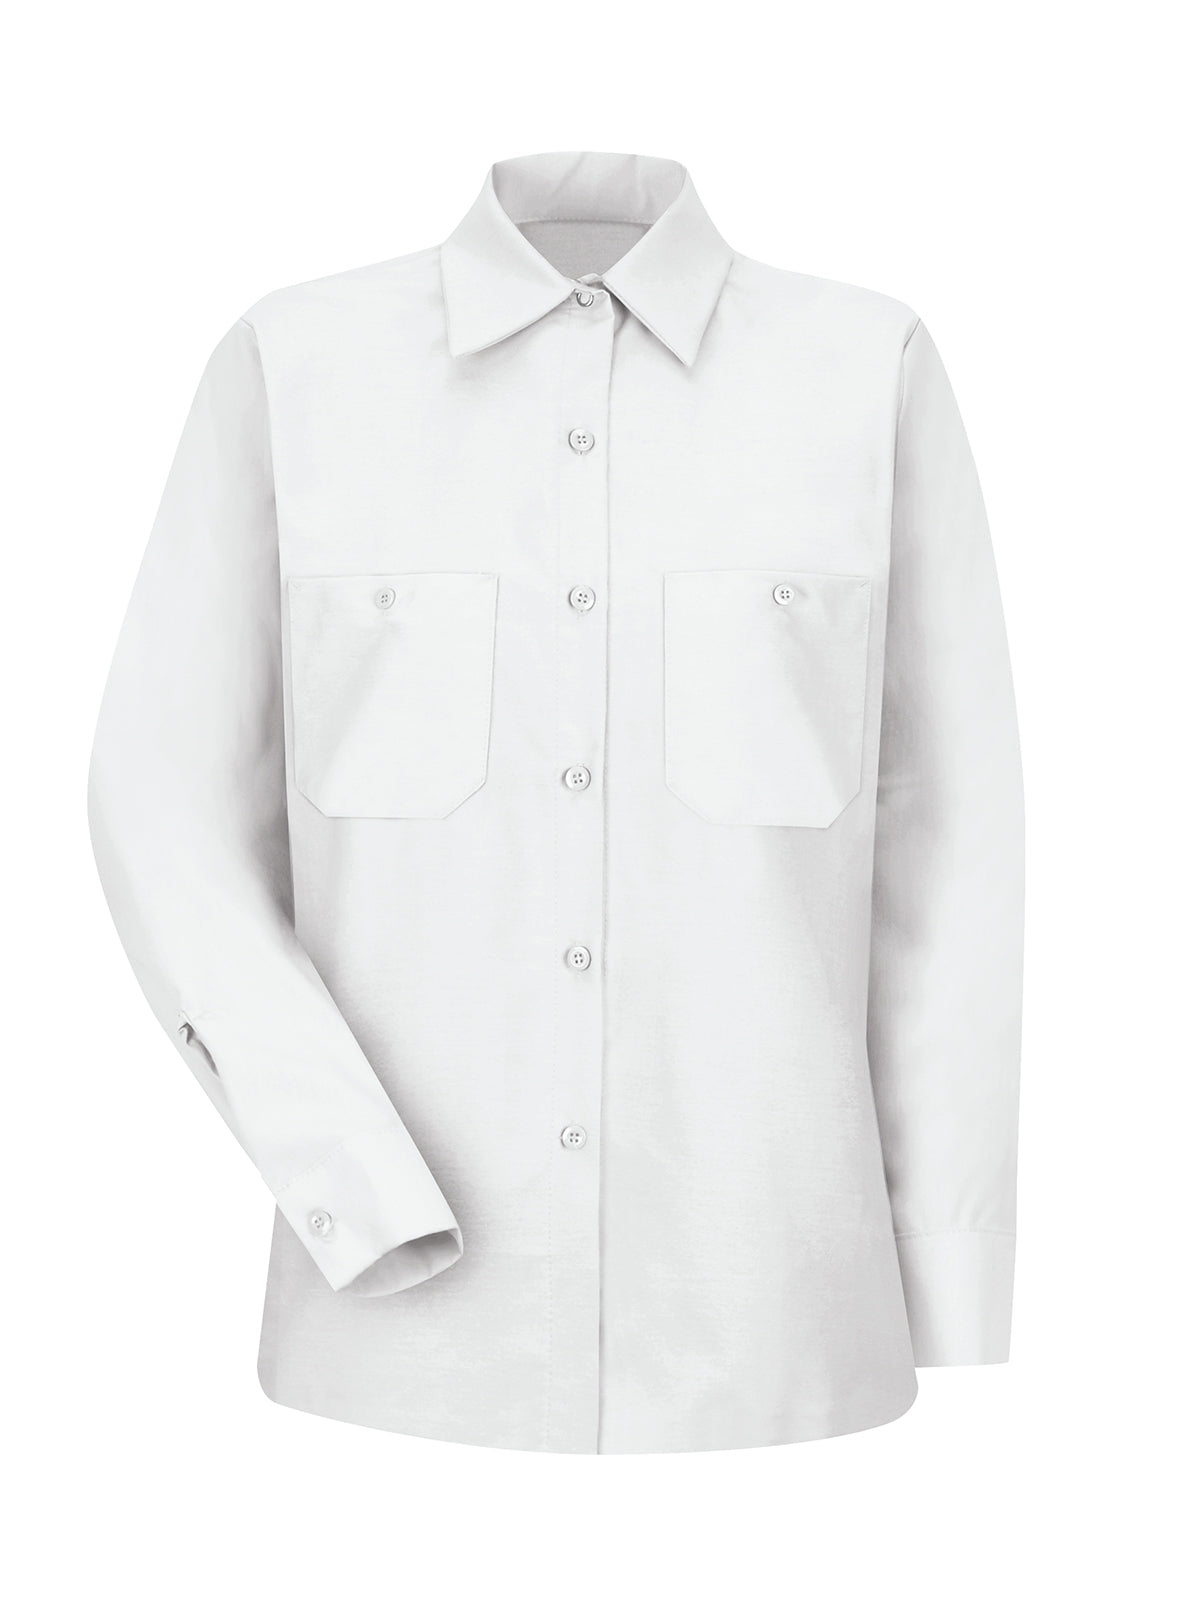 Women's Long Sleeve Industrial Work Shirt - SP13 - White